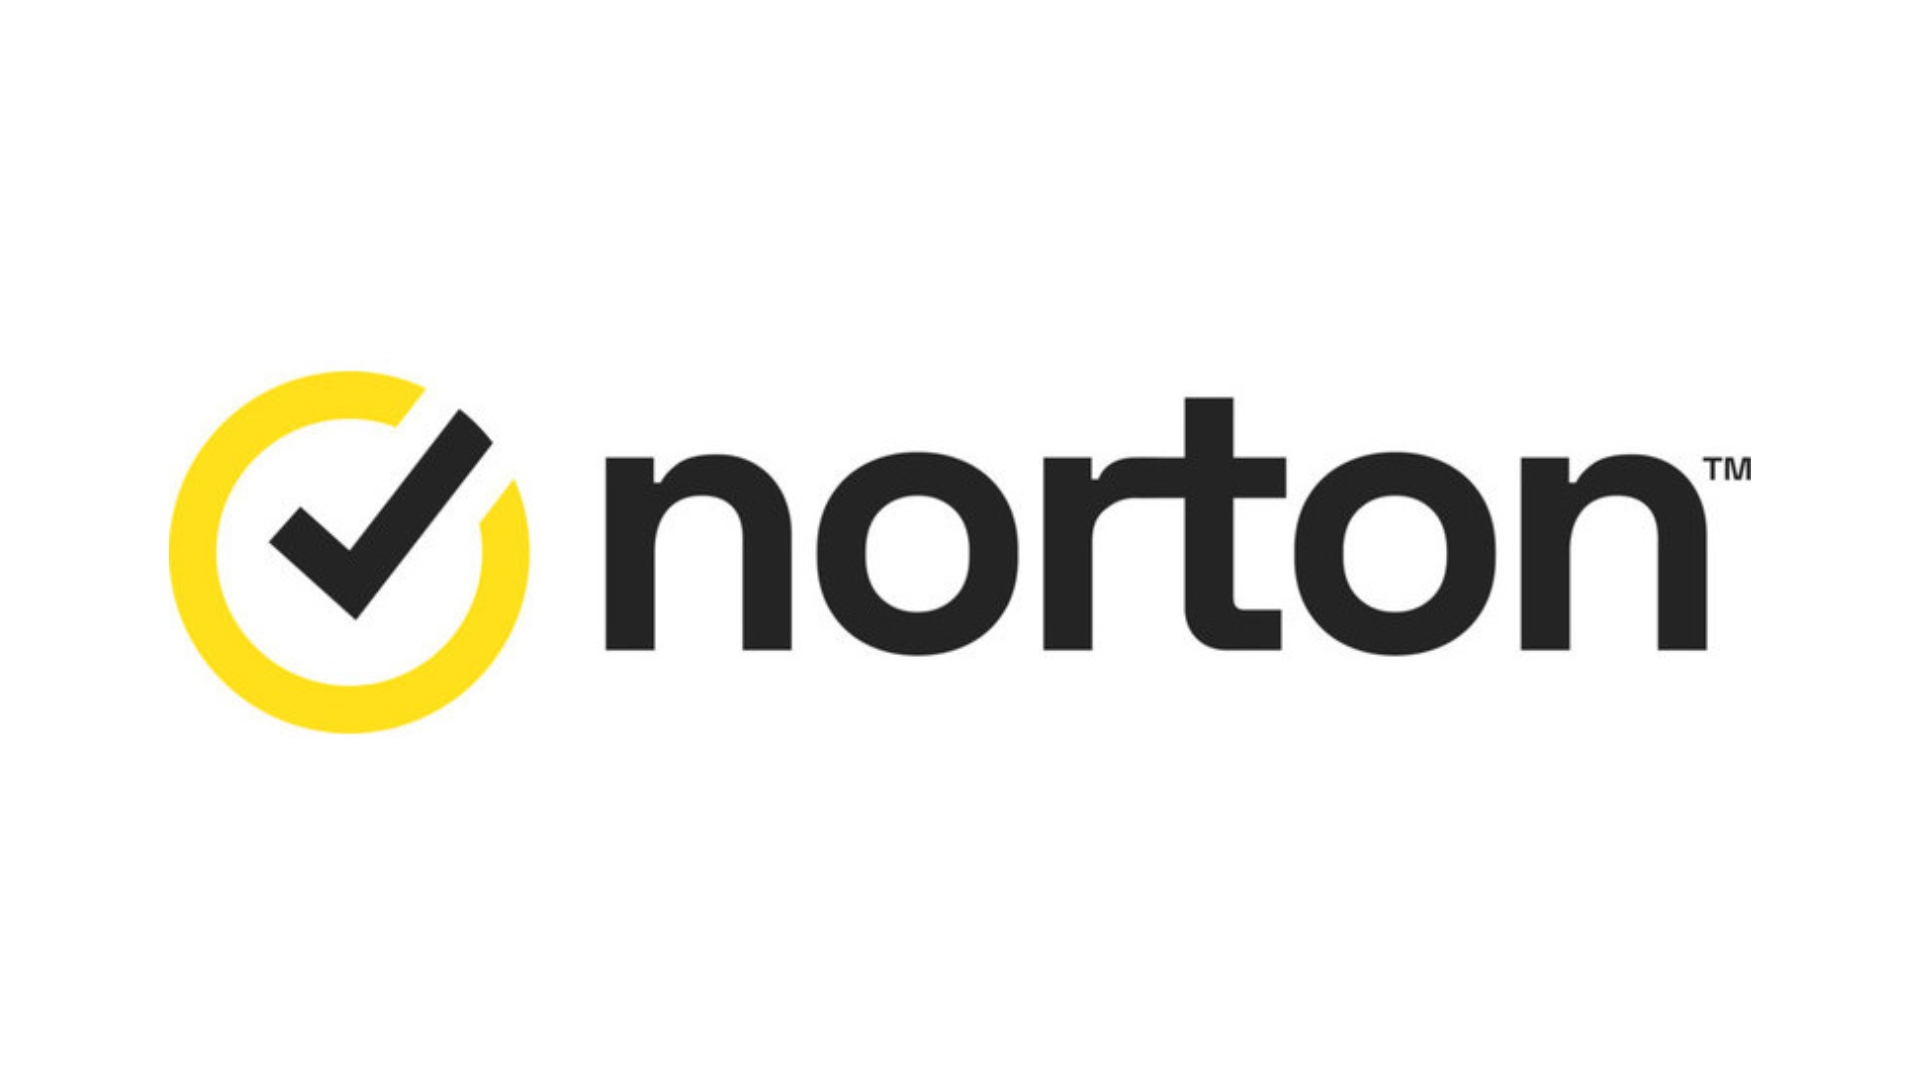 Best antivirus: image shows the Norton logo.